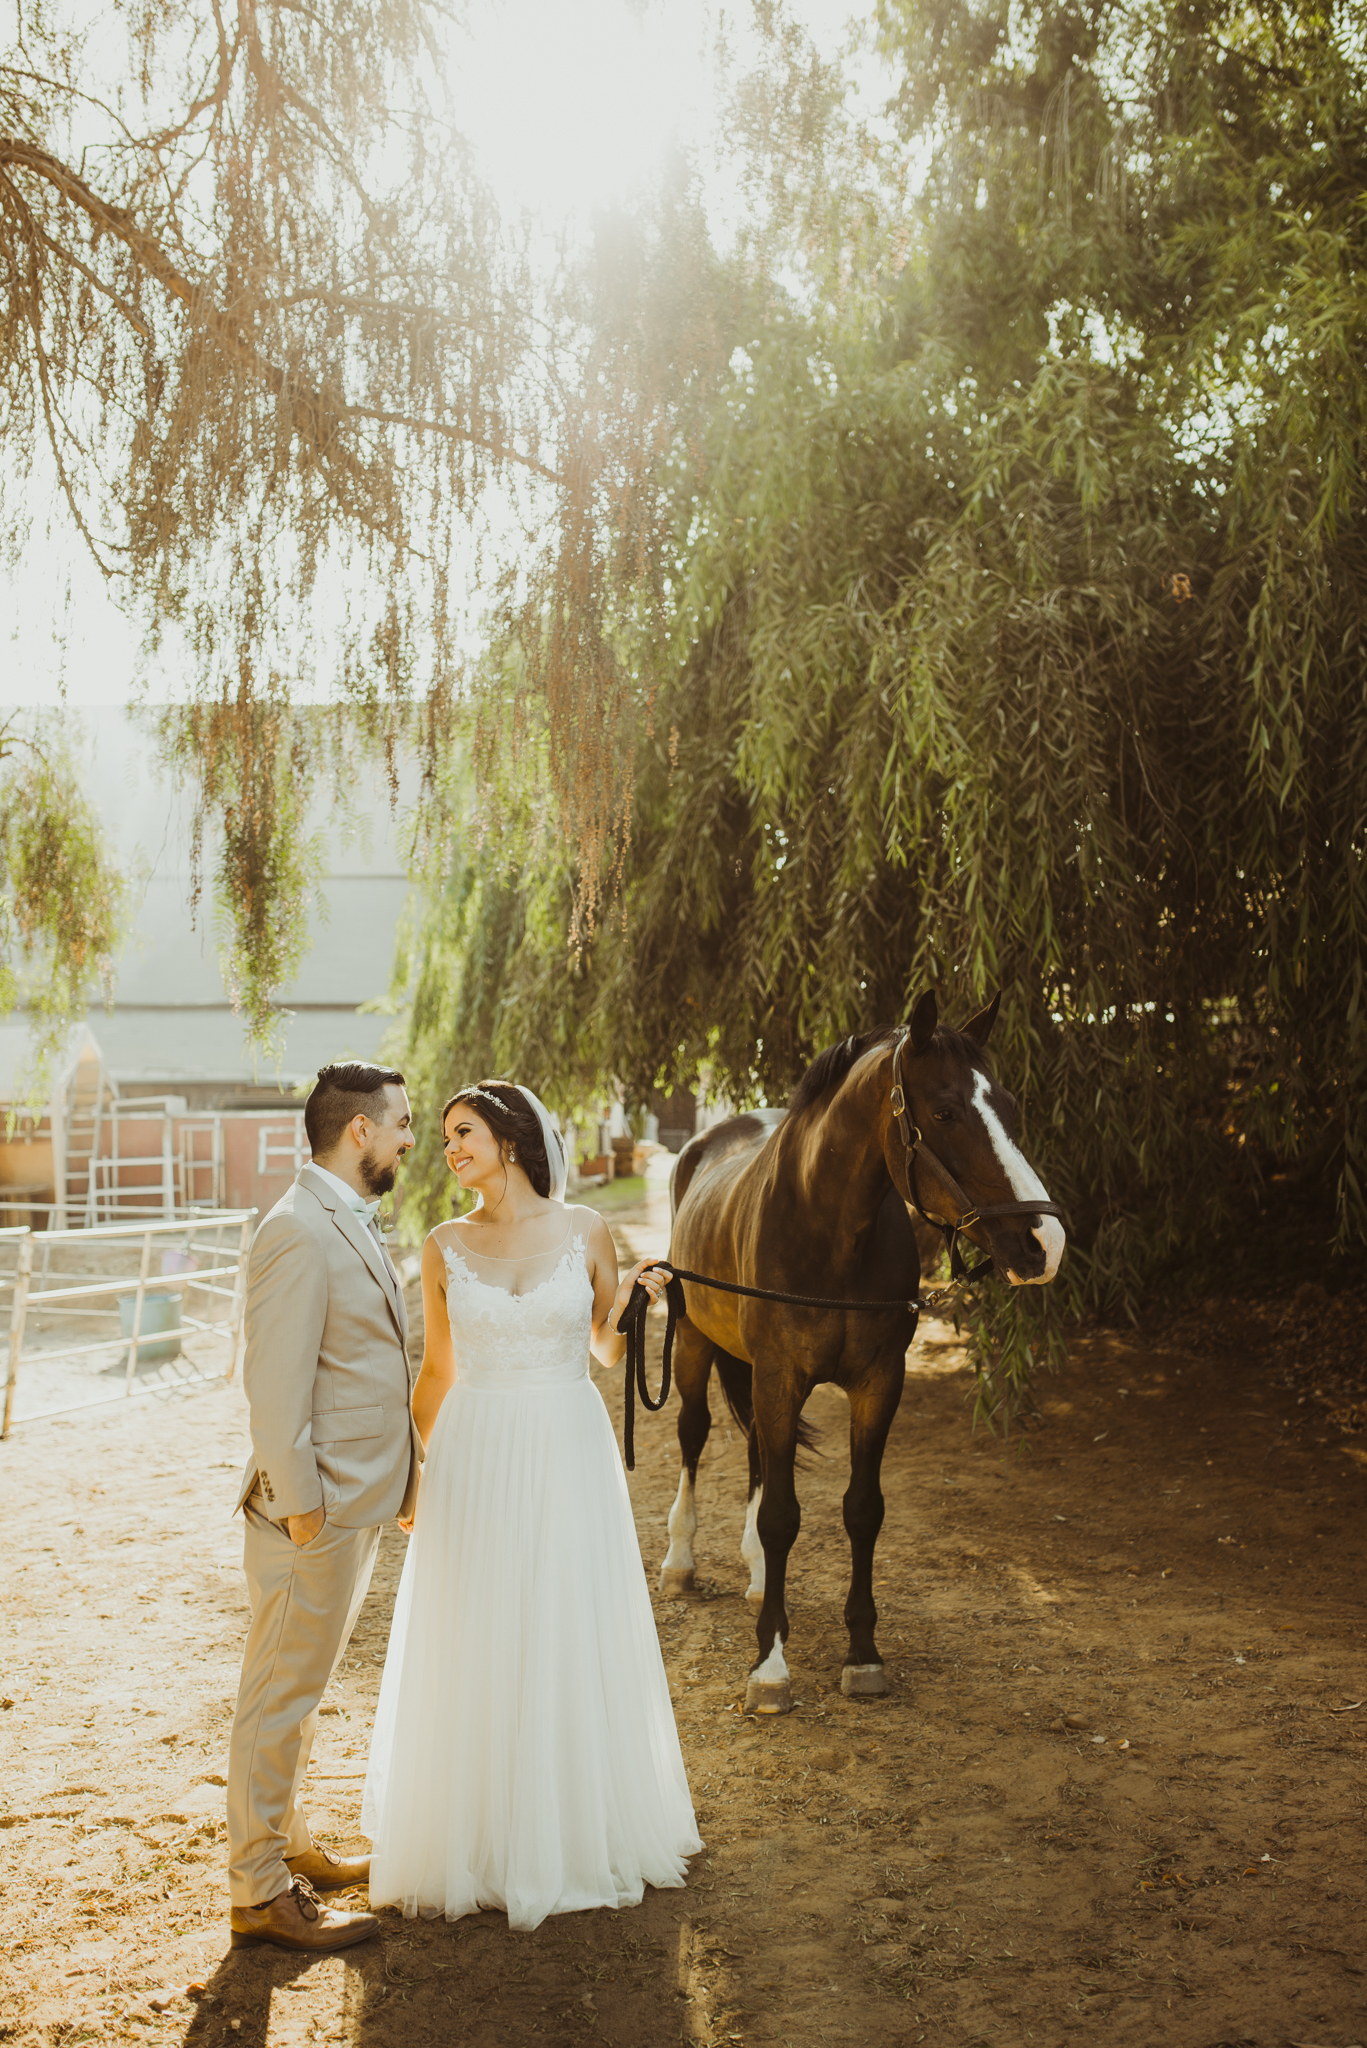 ©Isaiah + Taylor Photography - Brendan + Stefana, Quail Haven Farm Wedding, Vista-114.jpg